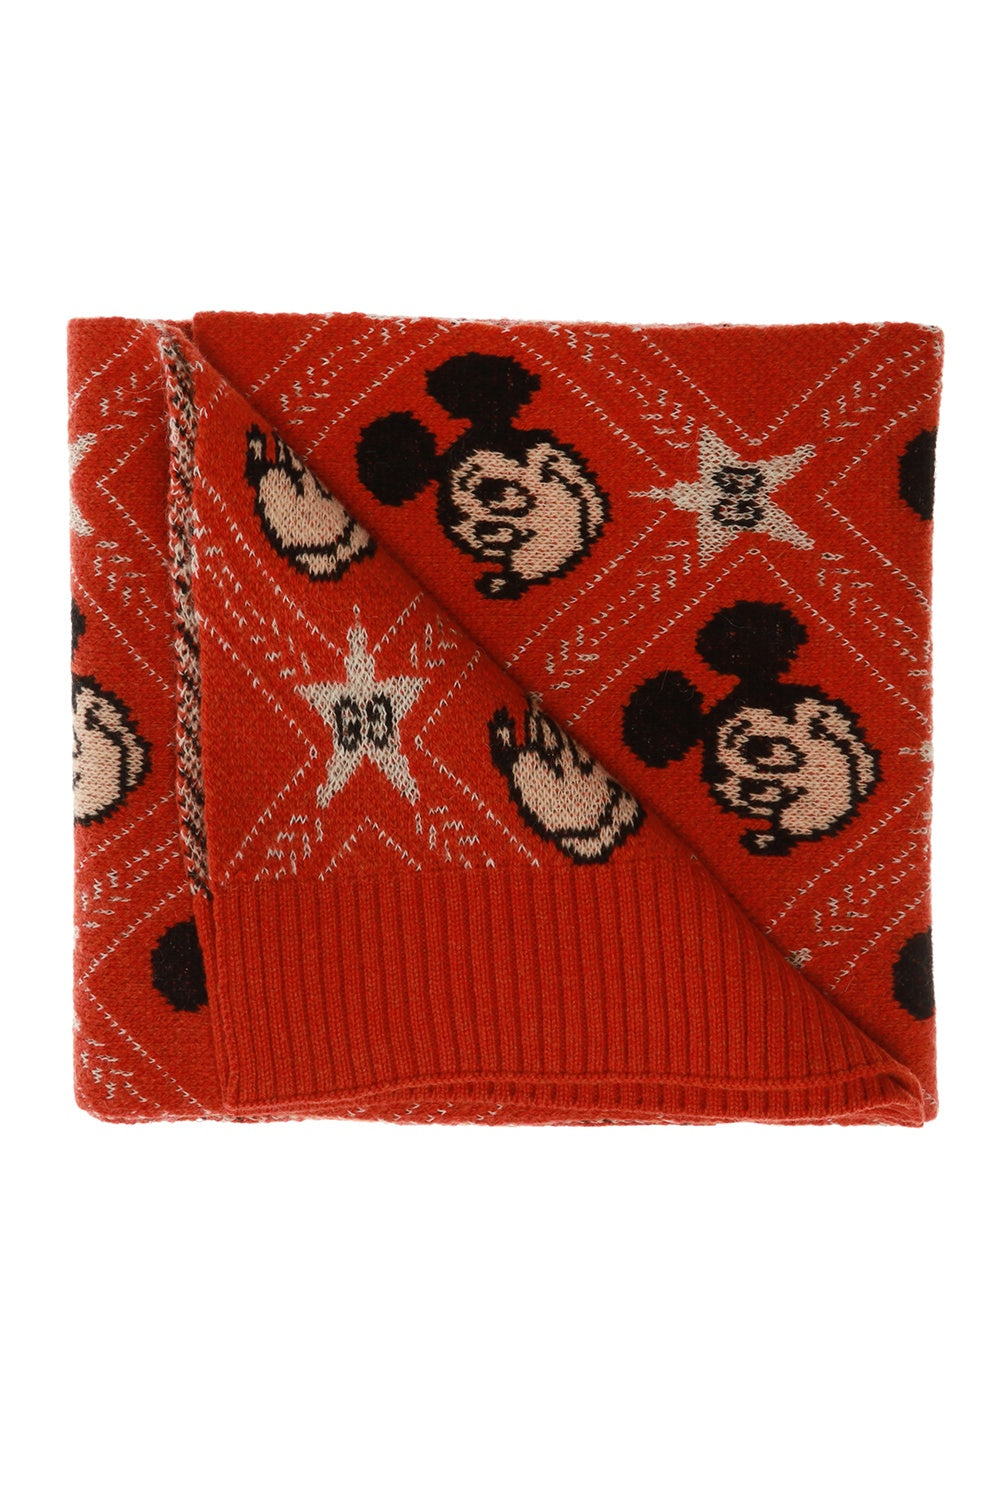 Gucci x Disney Mickey Mouse Wool Scarf in Orange